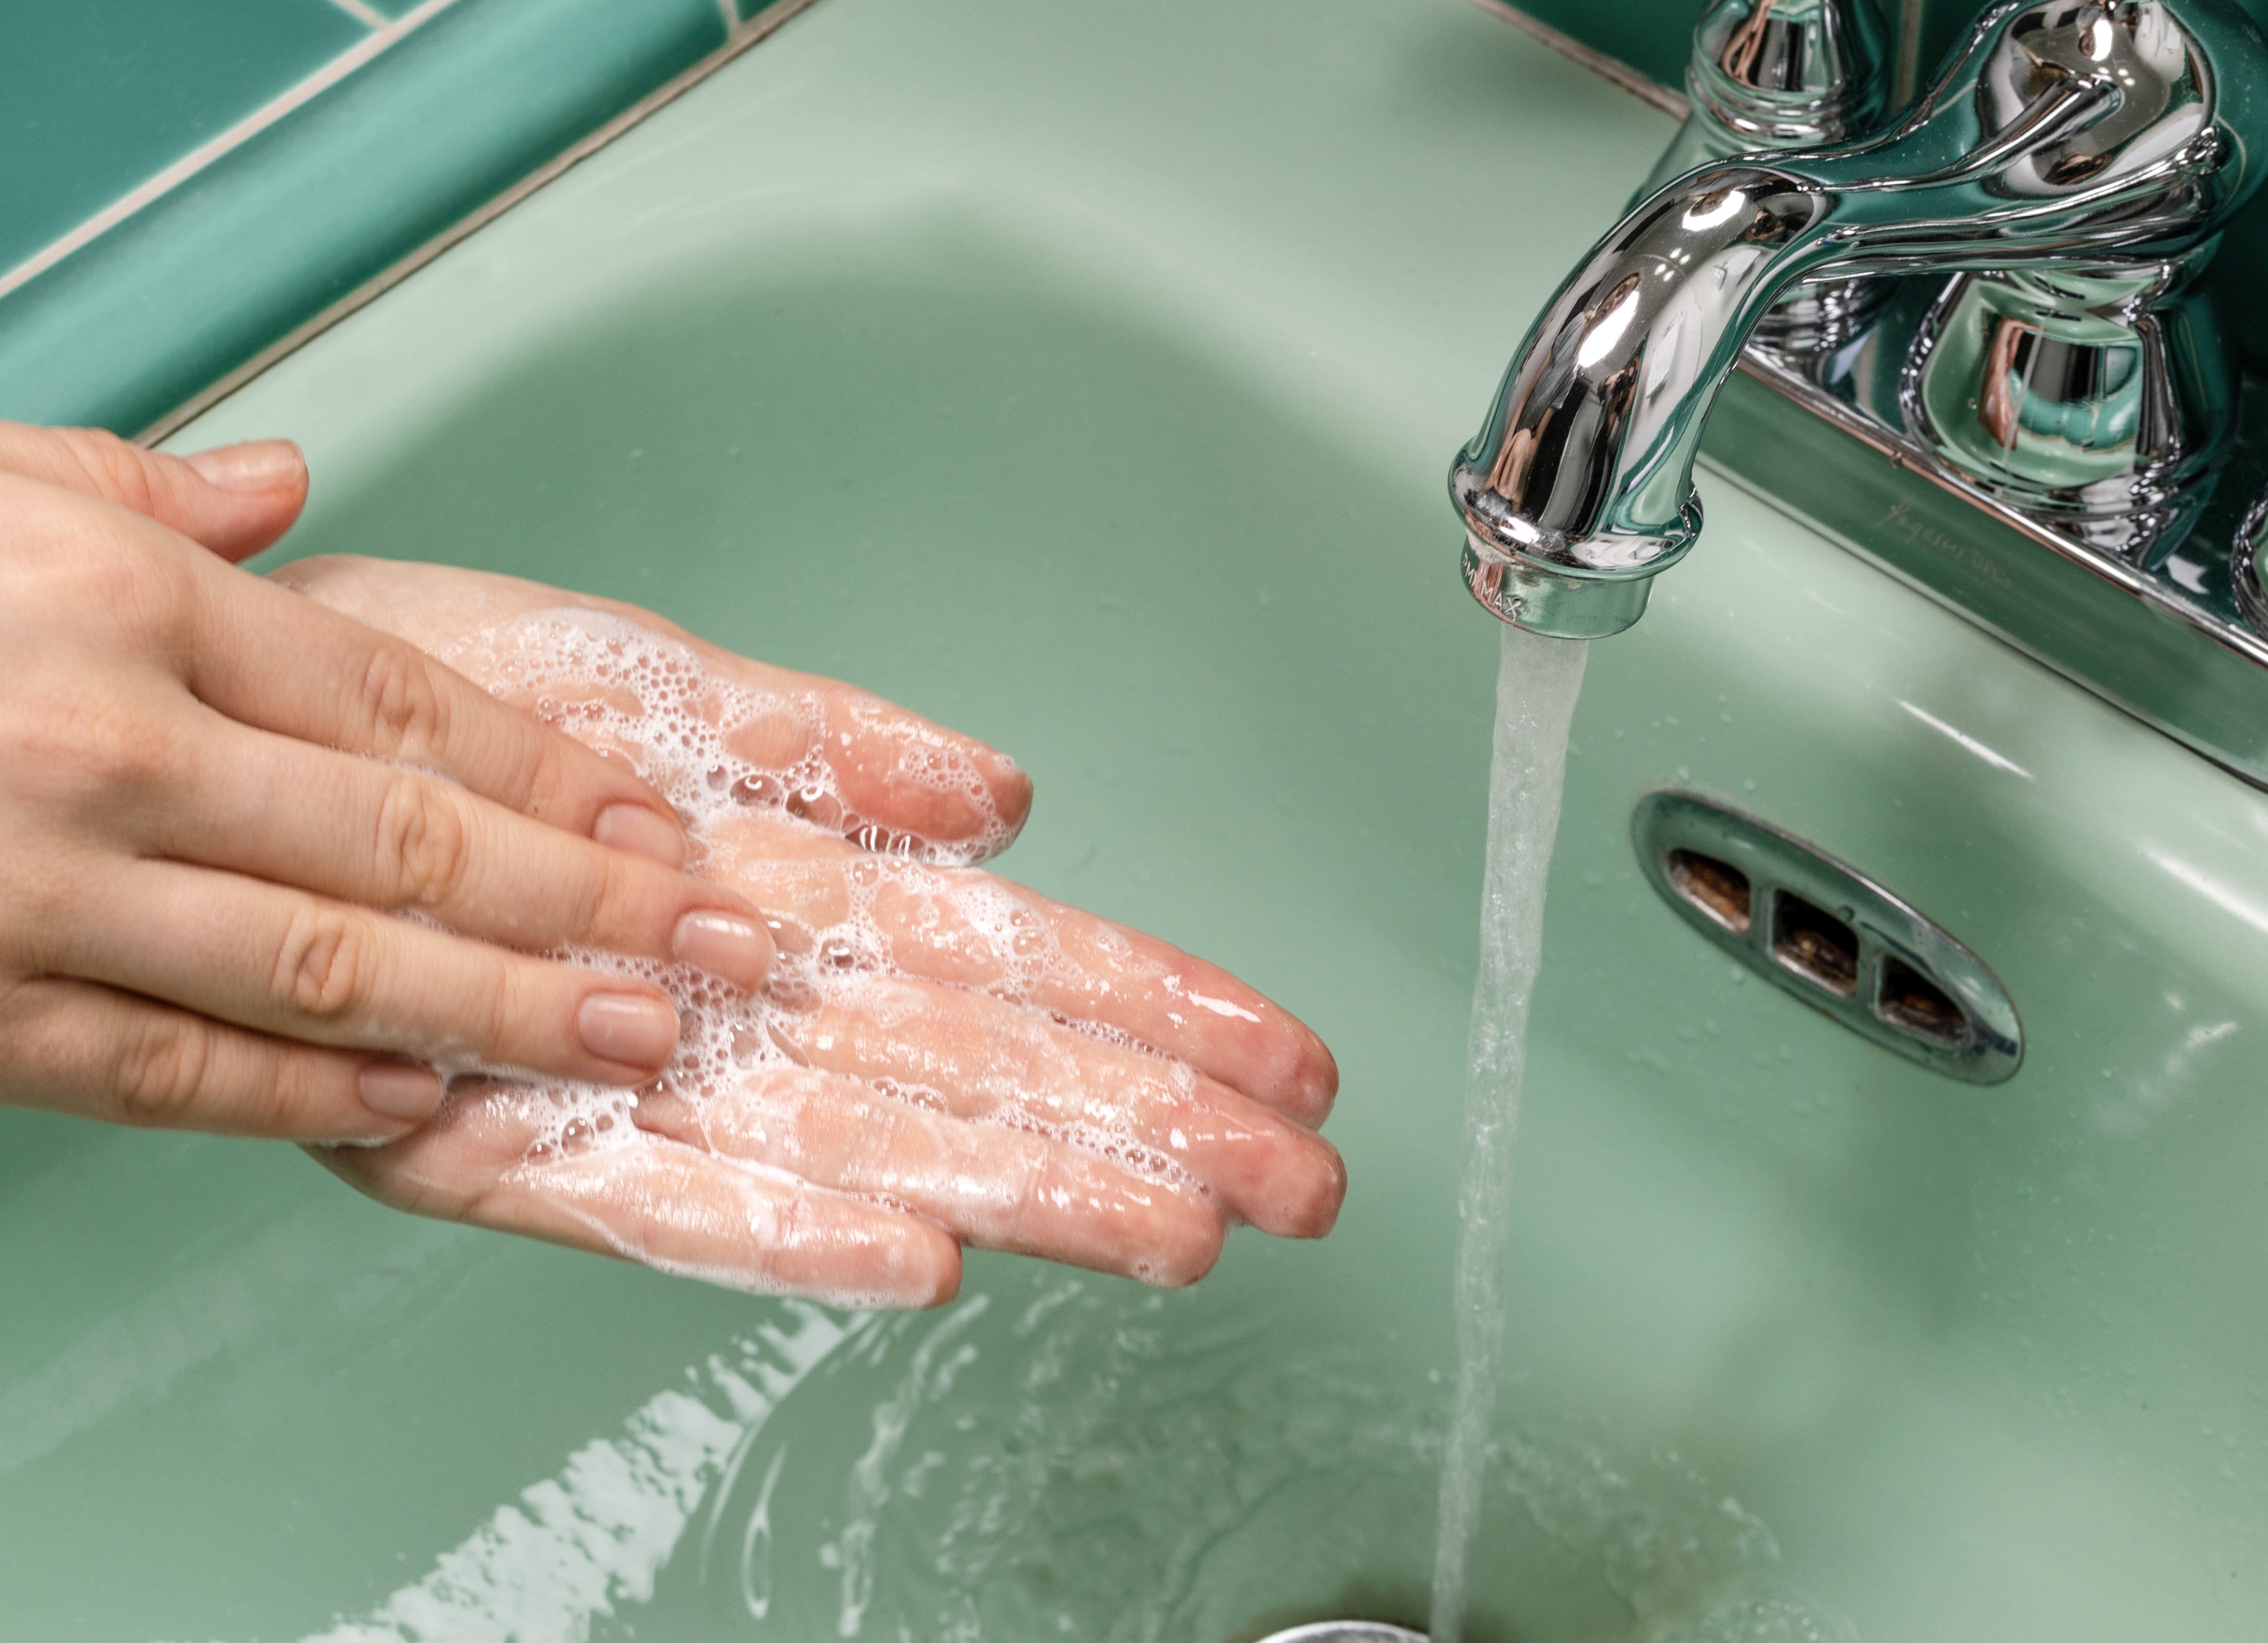 Lavar bem as mãos Foto:Unsplash